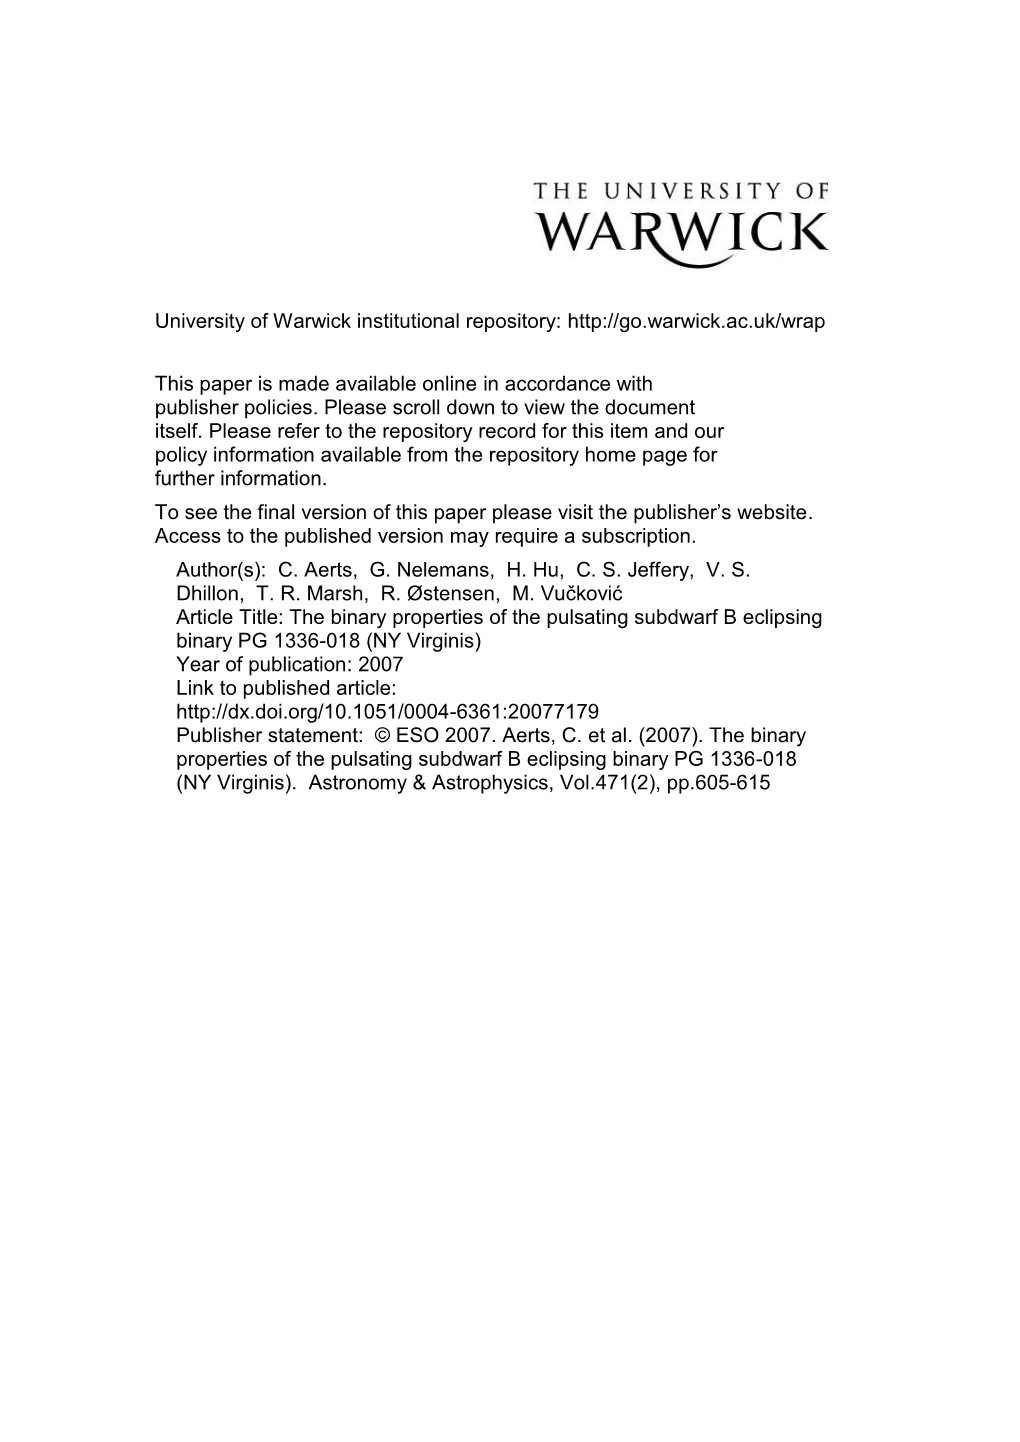 Astronomy & Astrophysics, Vol.471(2), Pp.605-615